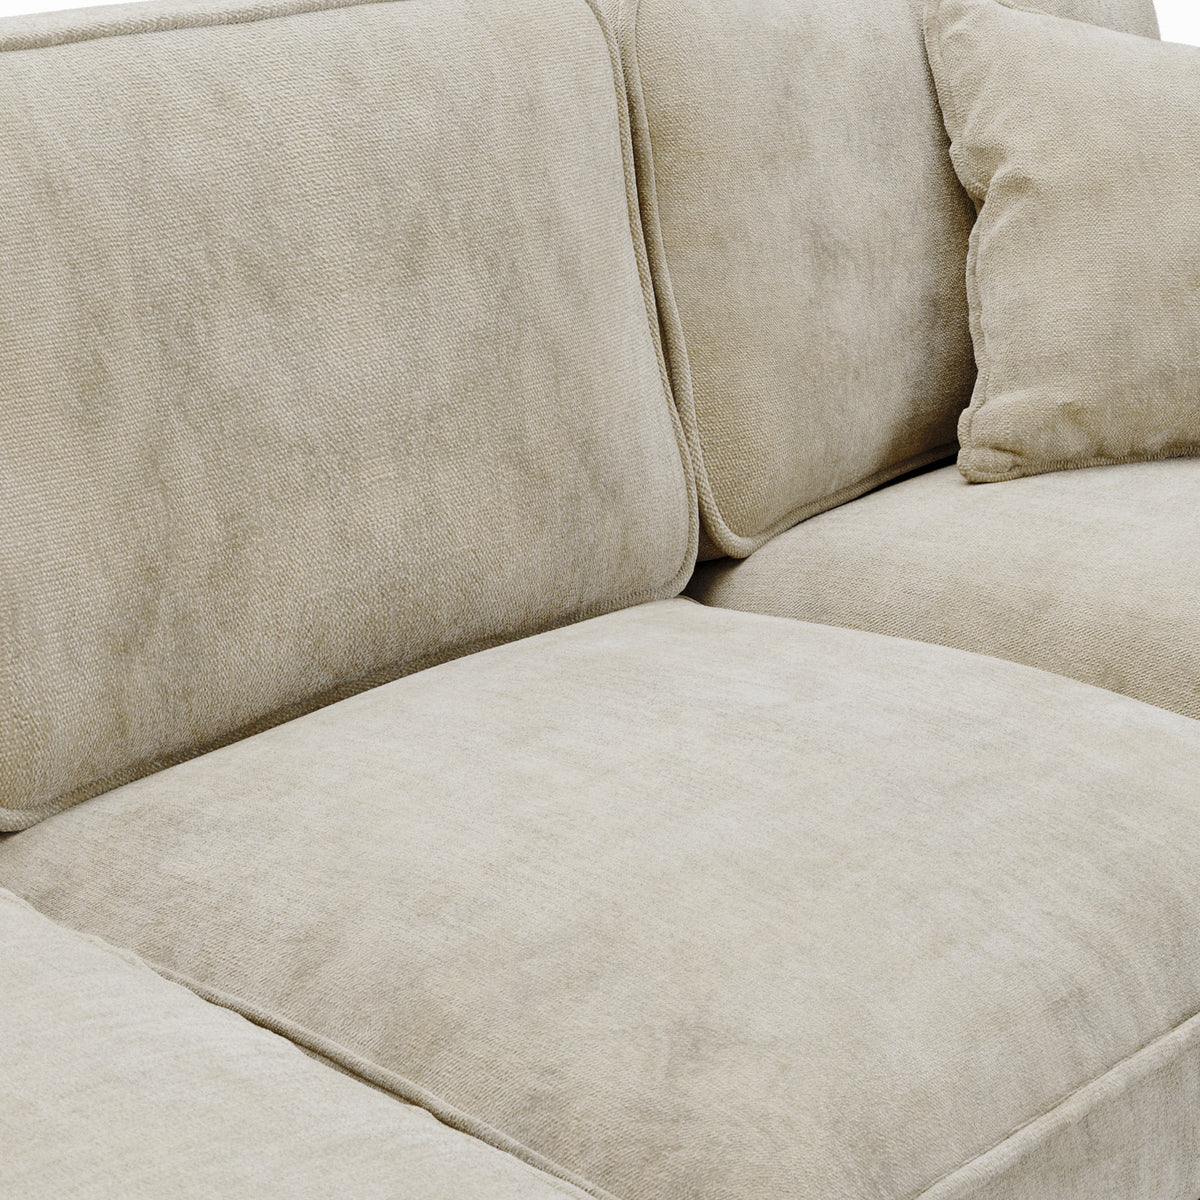 Alfie Mink 4 Seater Sofa from Roseland Furniture